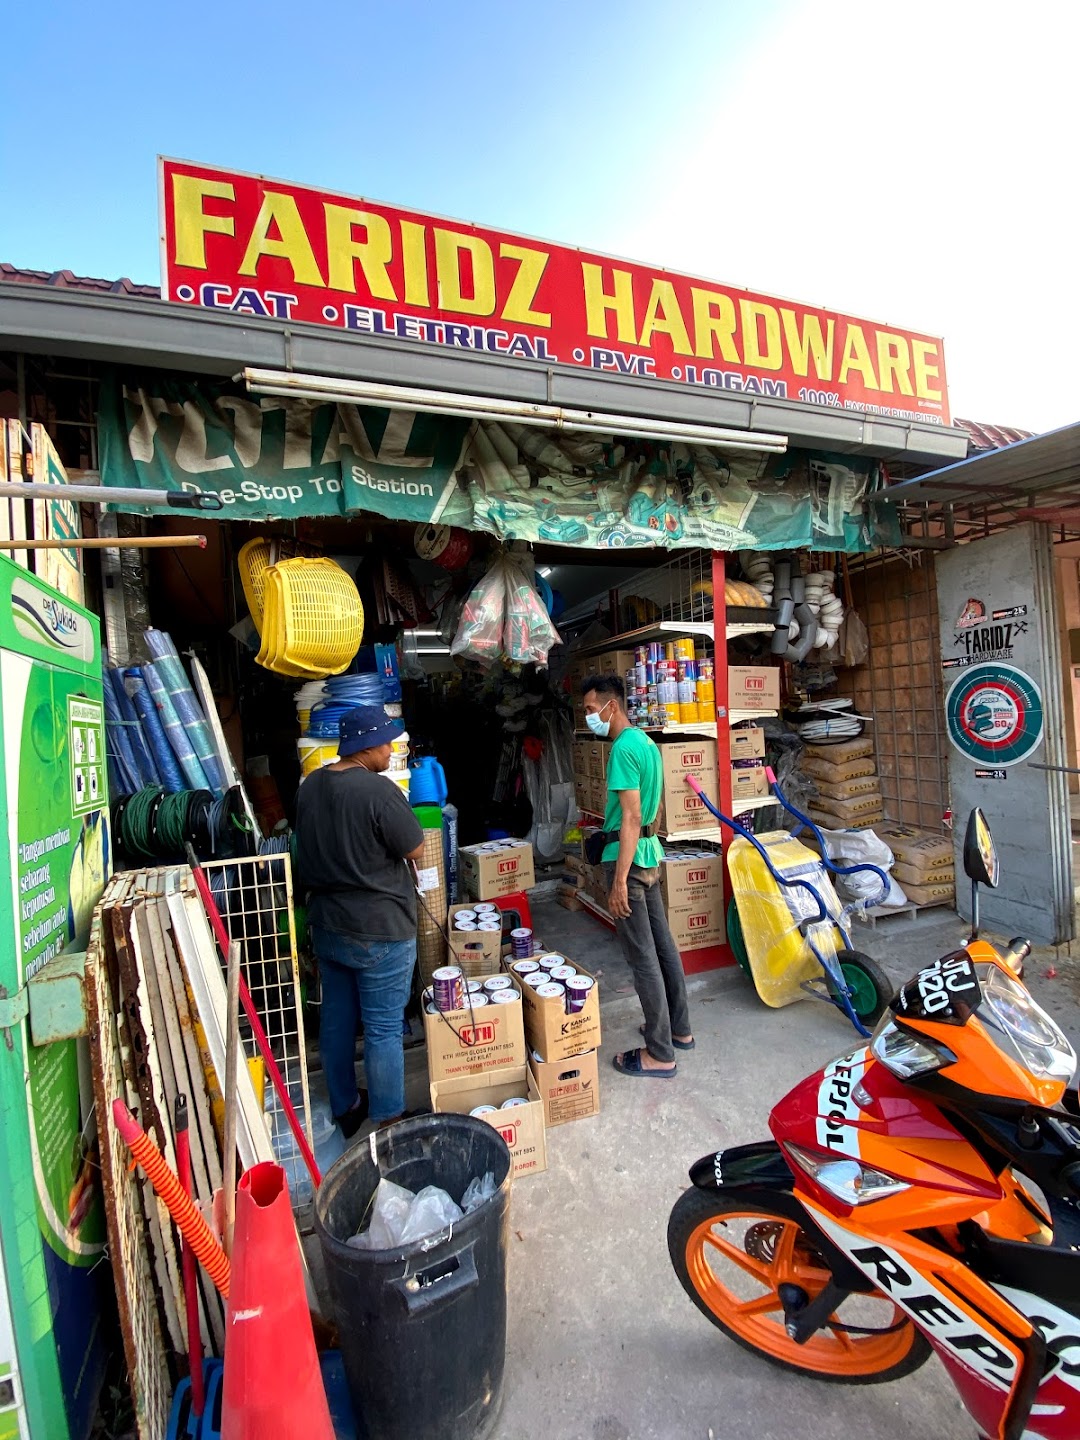 Faridz Hardware